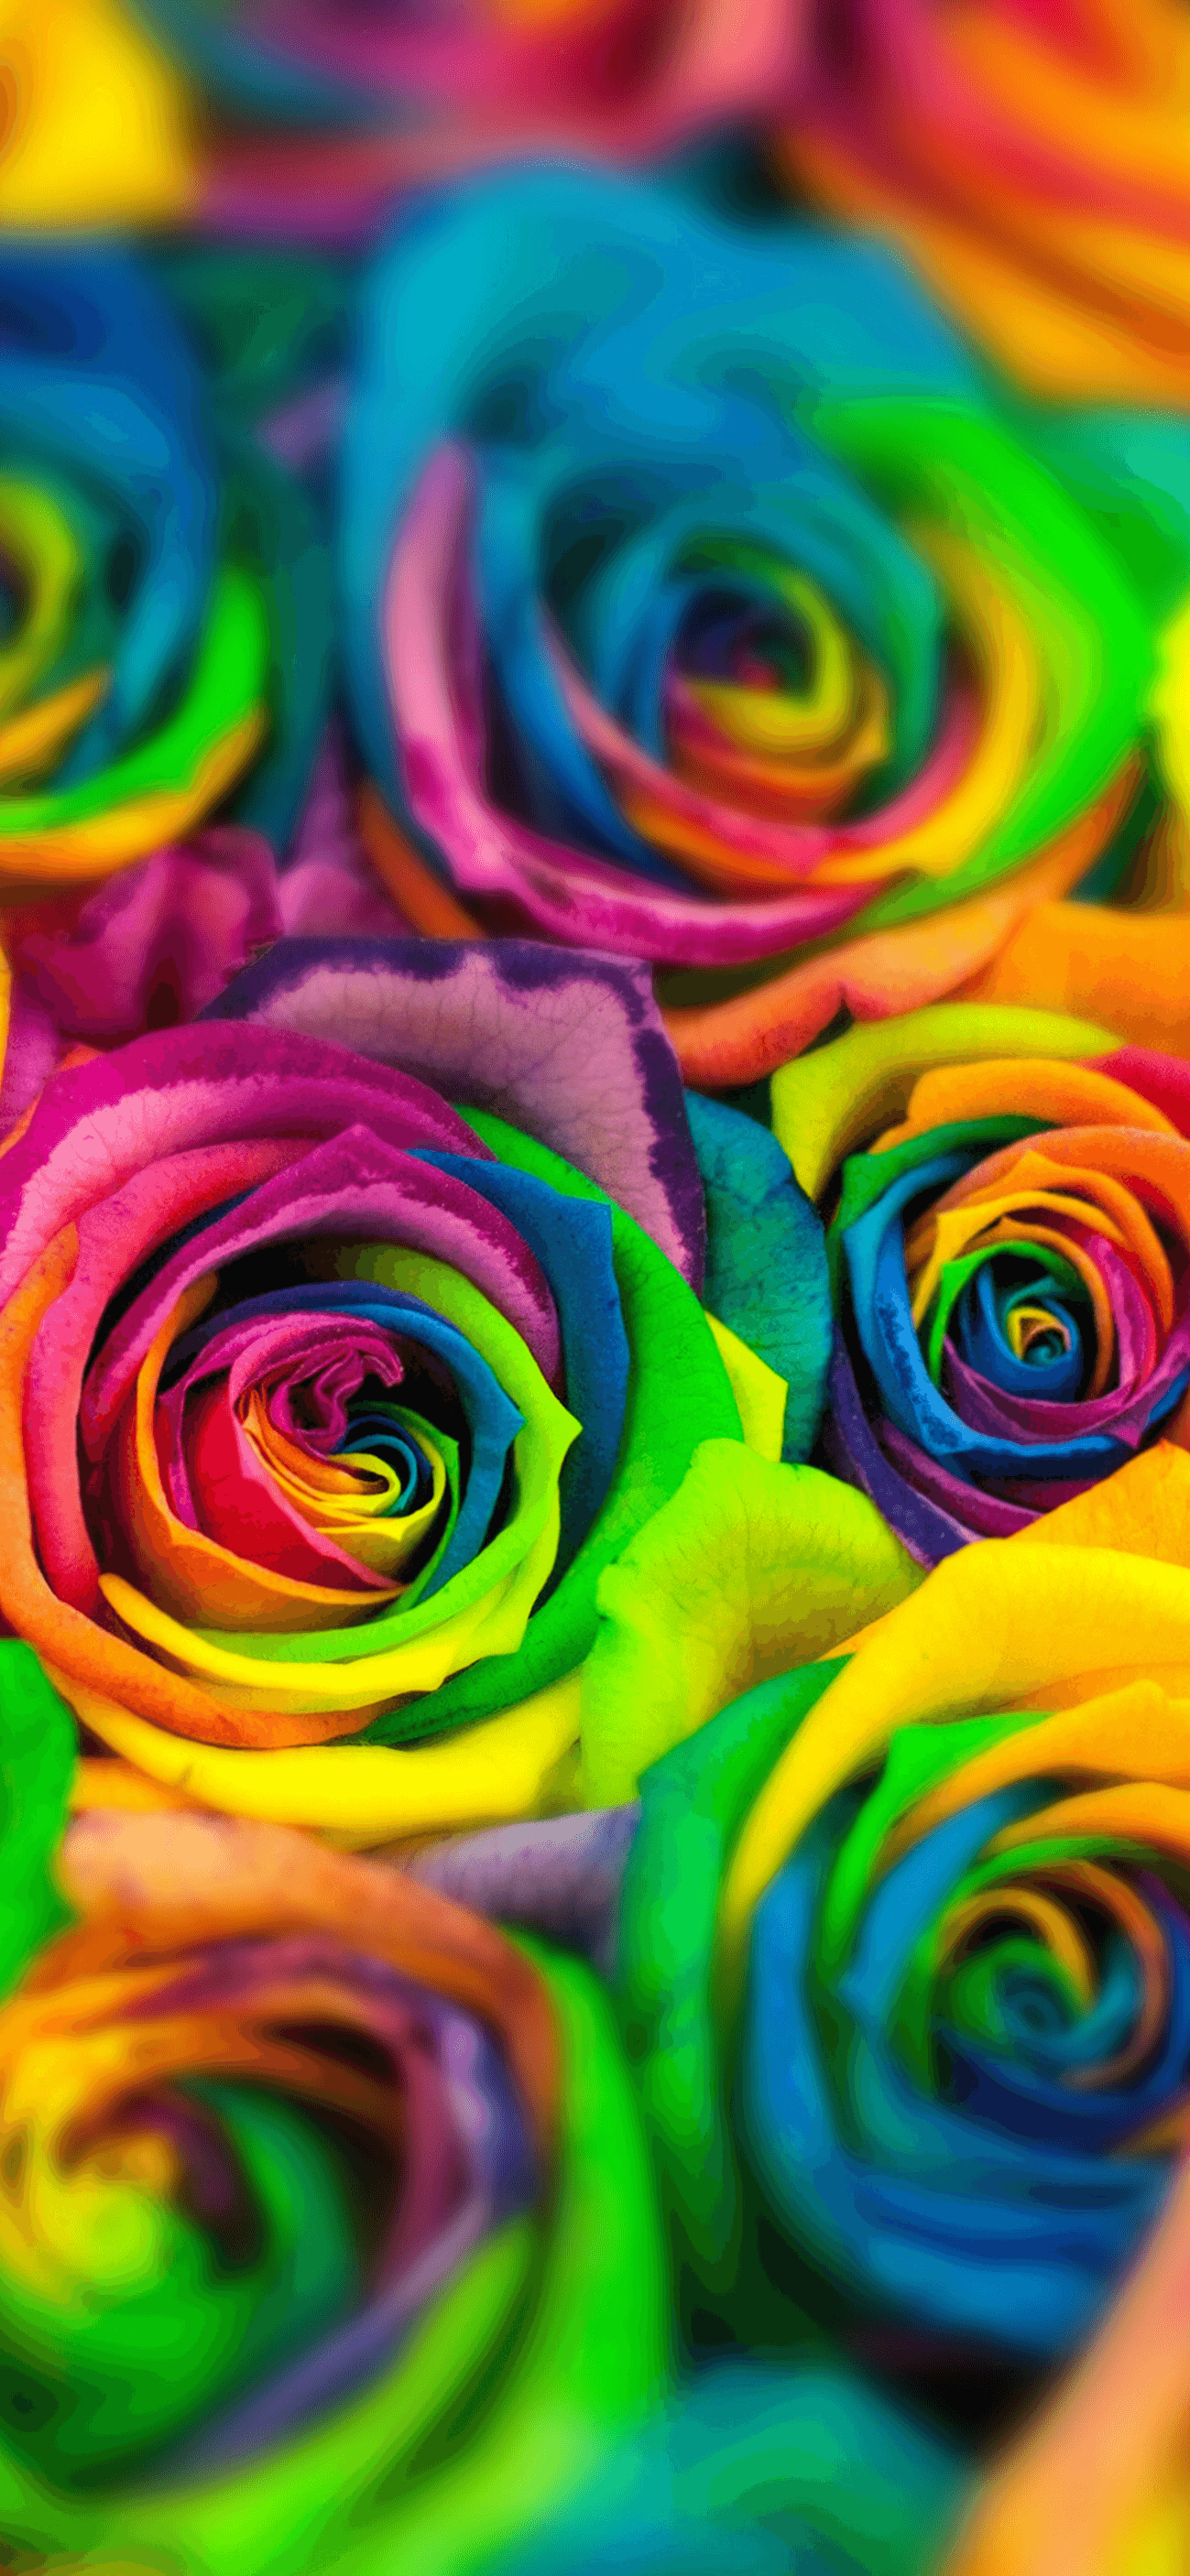 Rainbow Roses Wallpaper Free Rainbow Roses Background